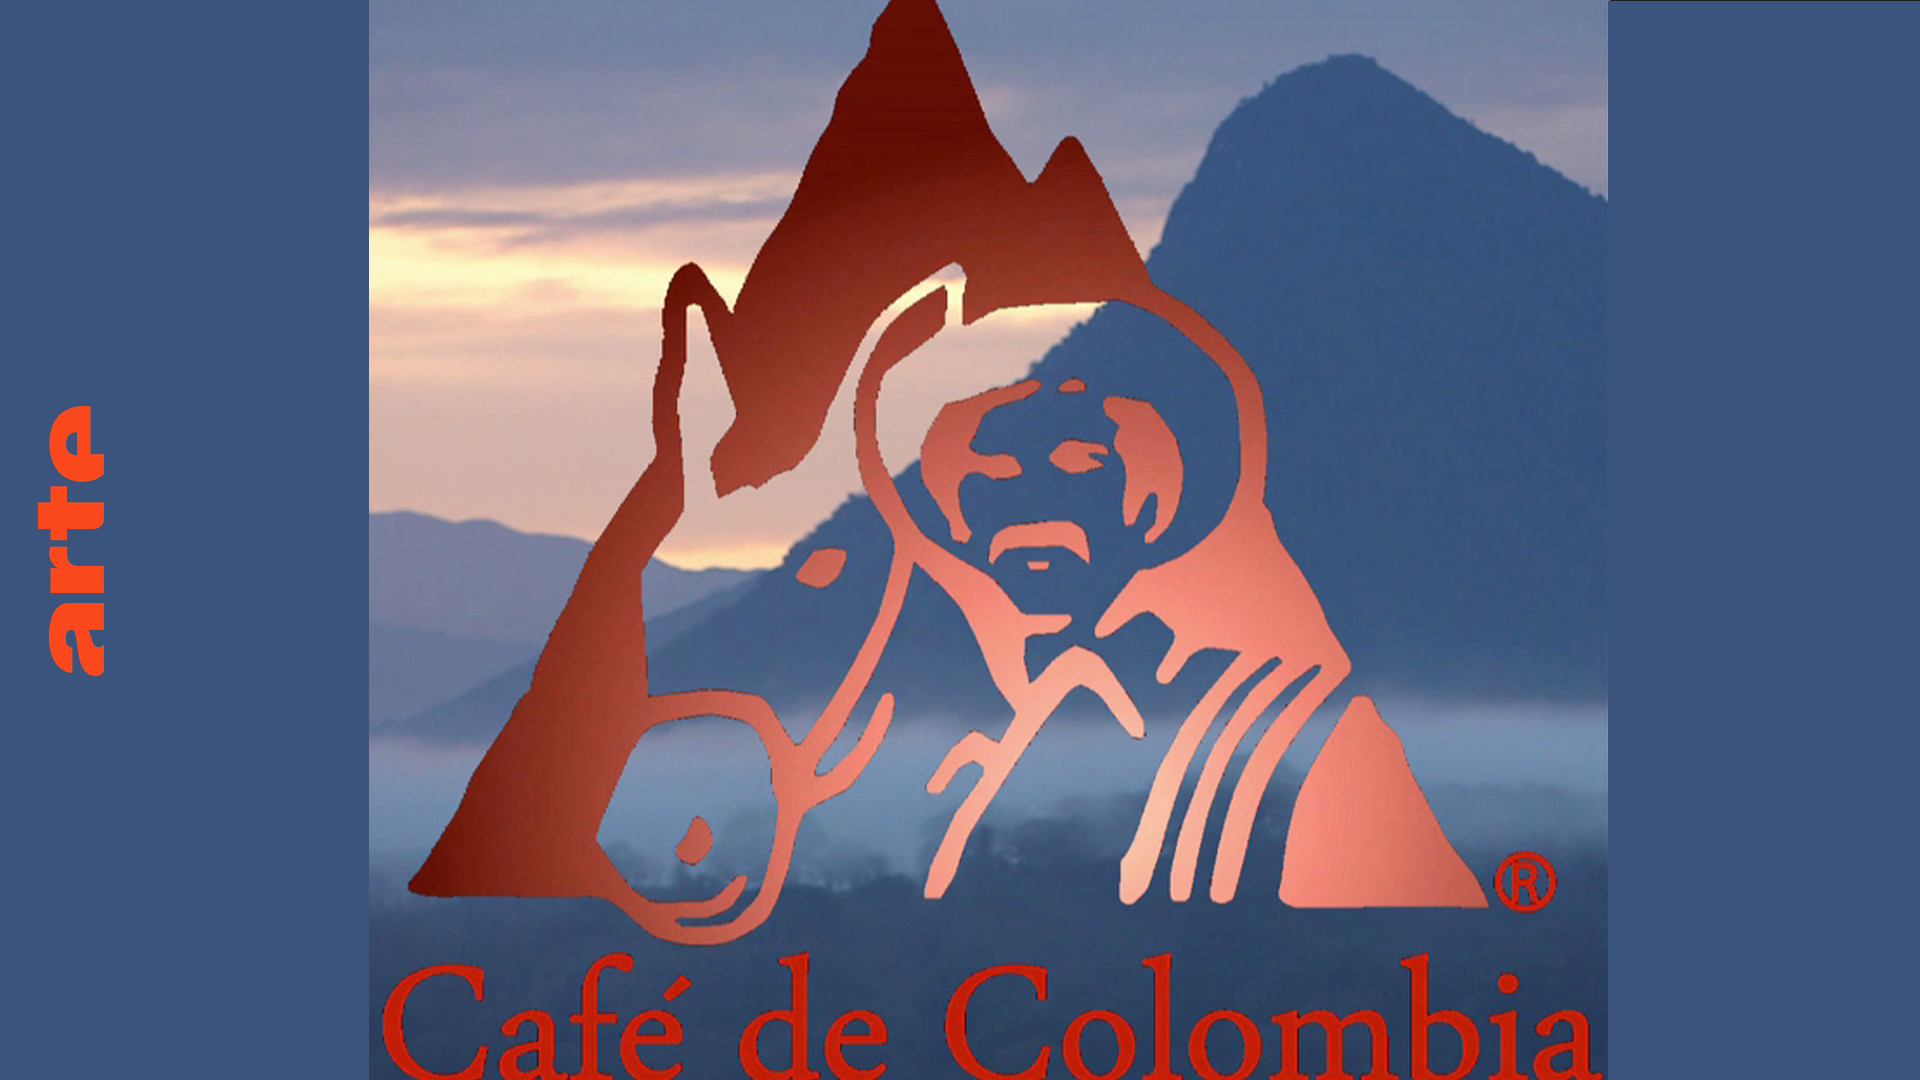 Kolumbien: Ein ganz besonderer Kaffeebotschafter